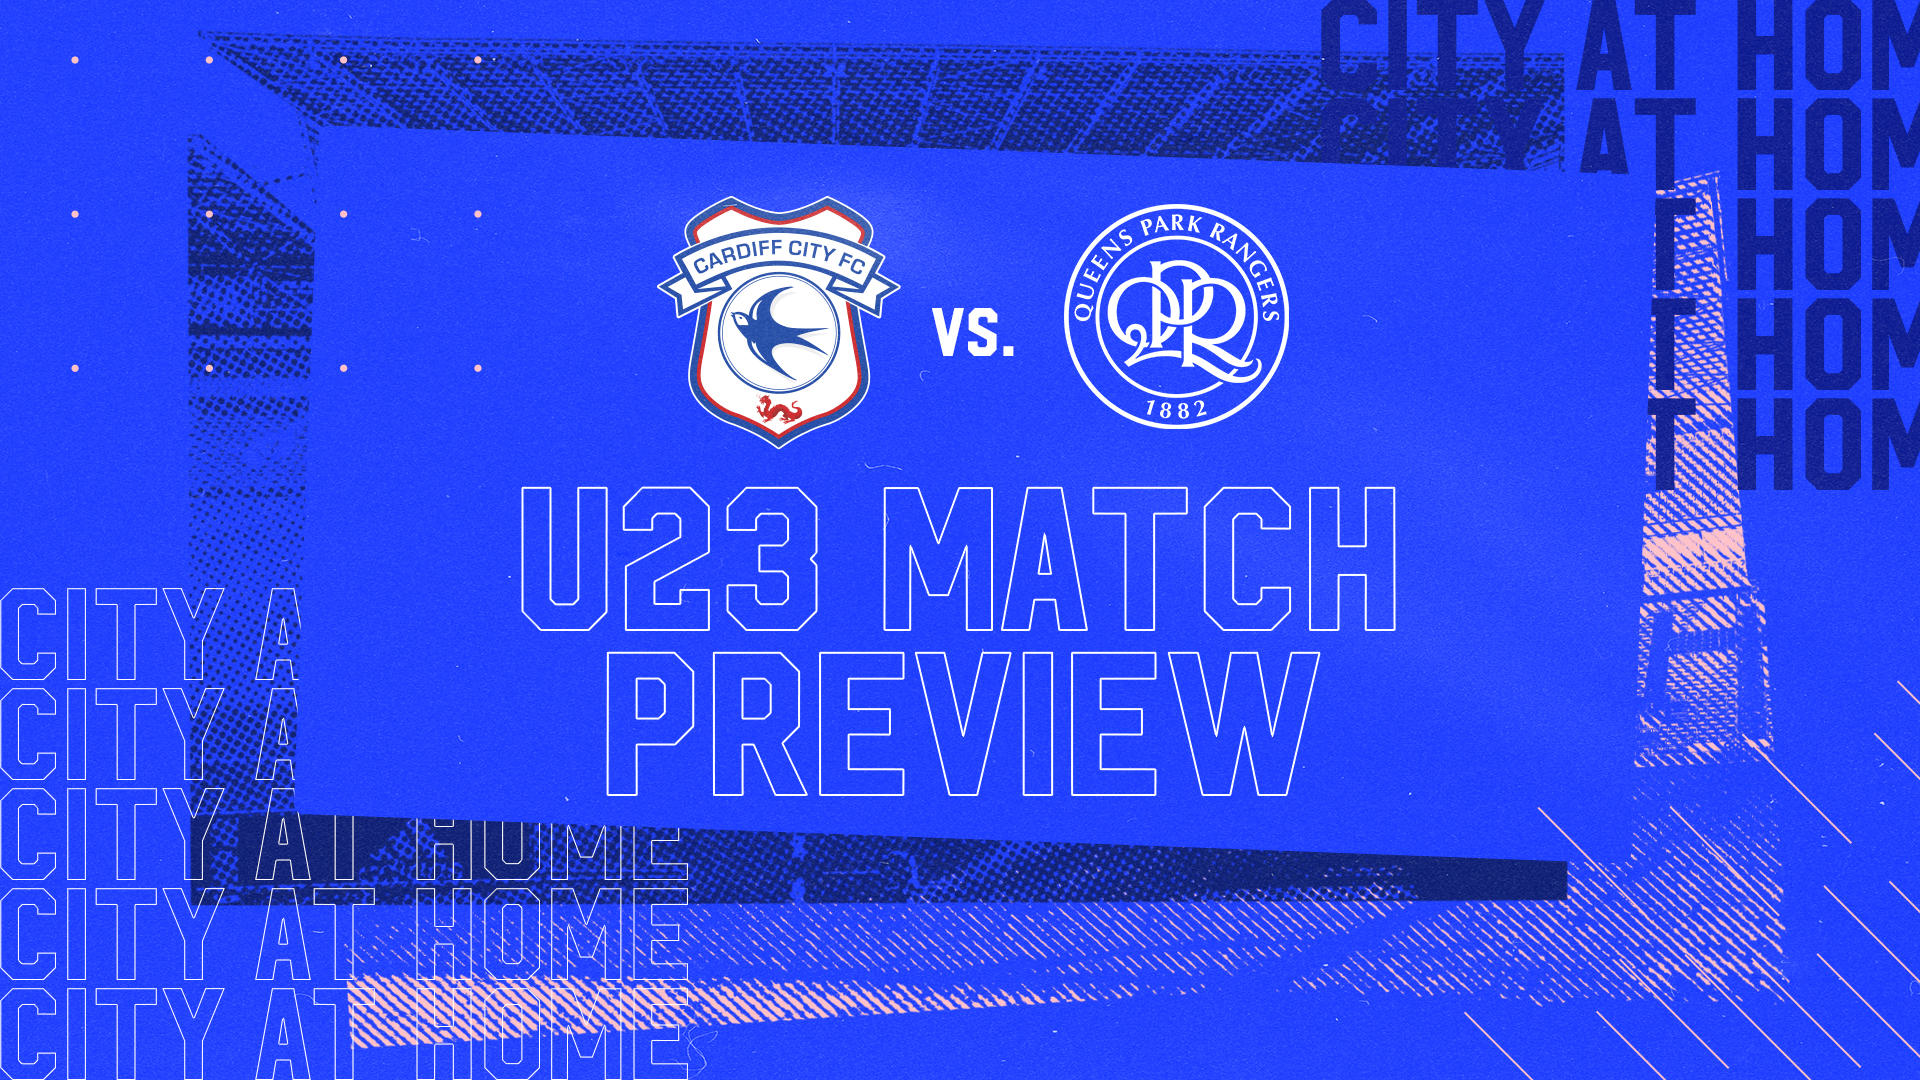 Match Preview - U23 vs. Millwall